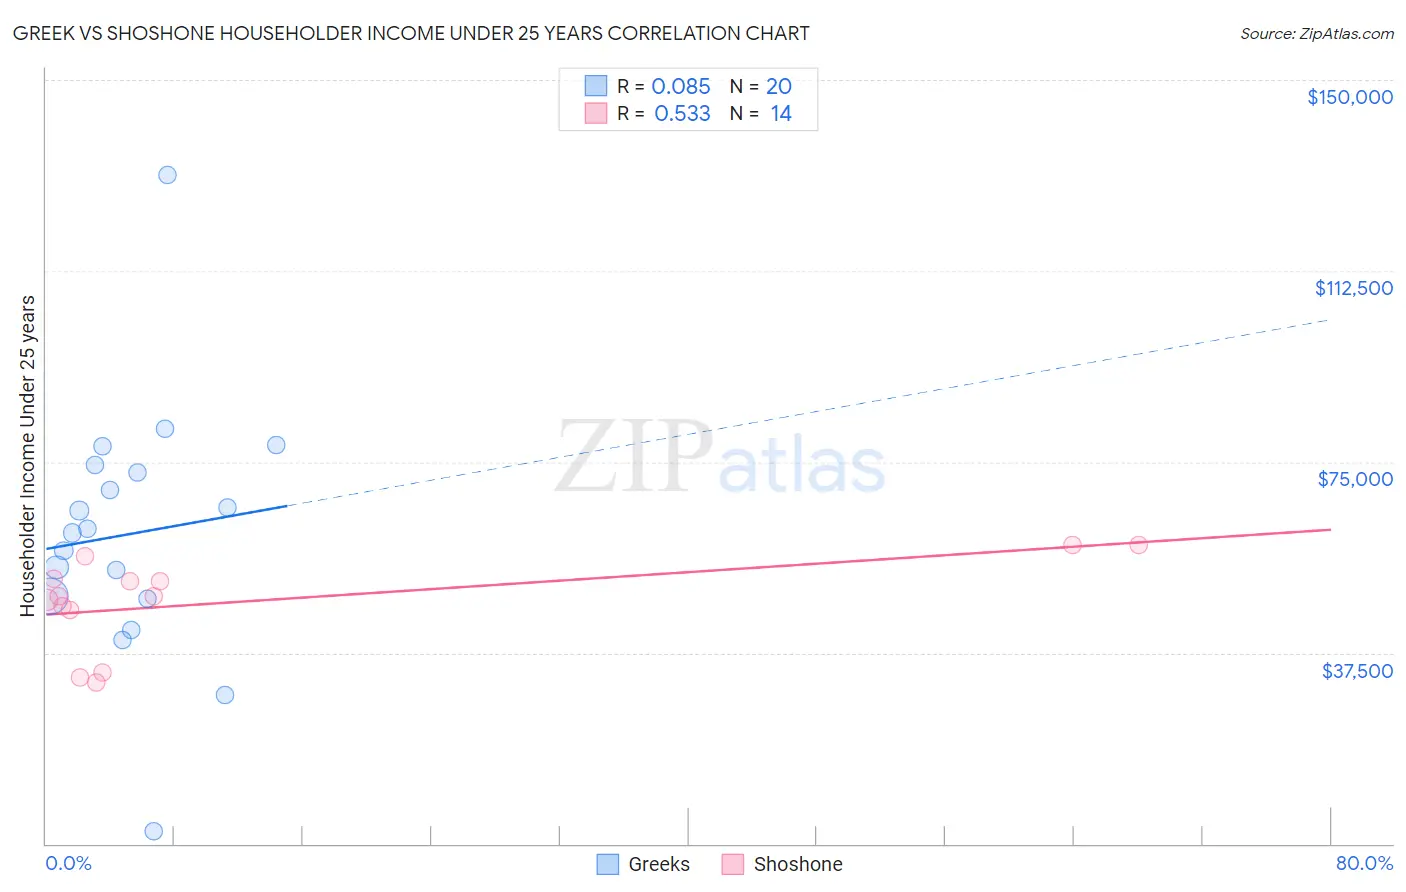 Greek vs Shoshone Householder Income Under 25 years